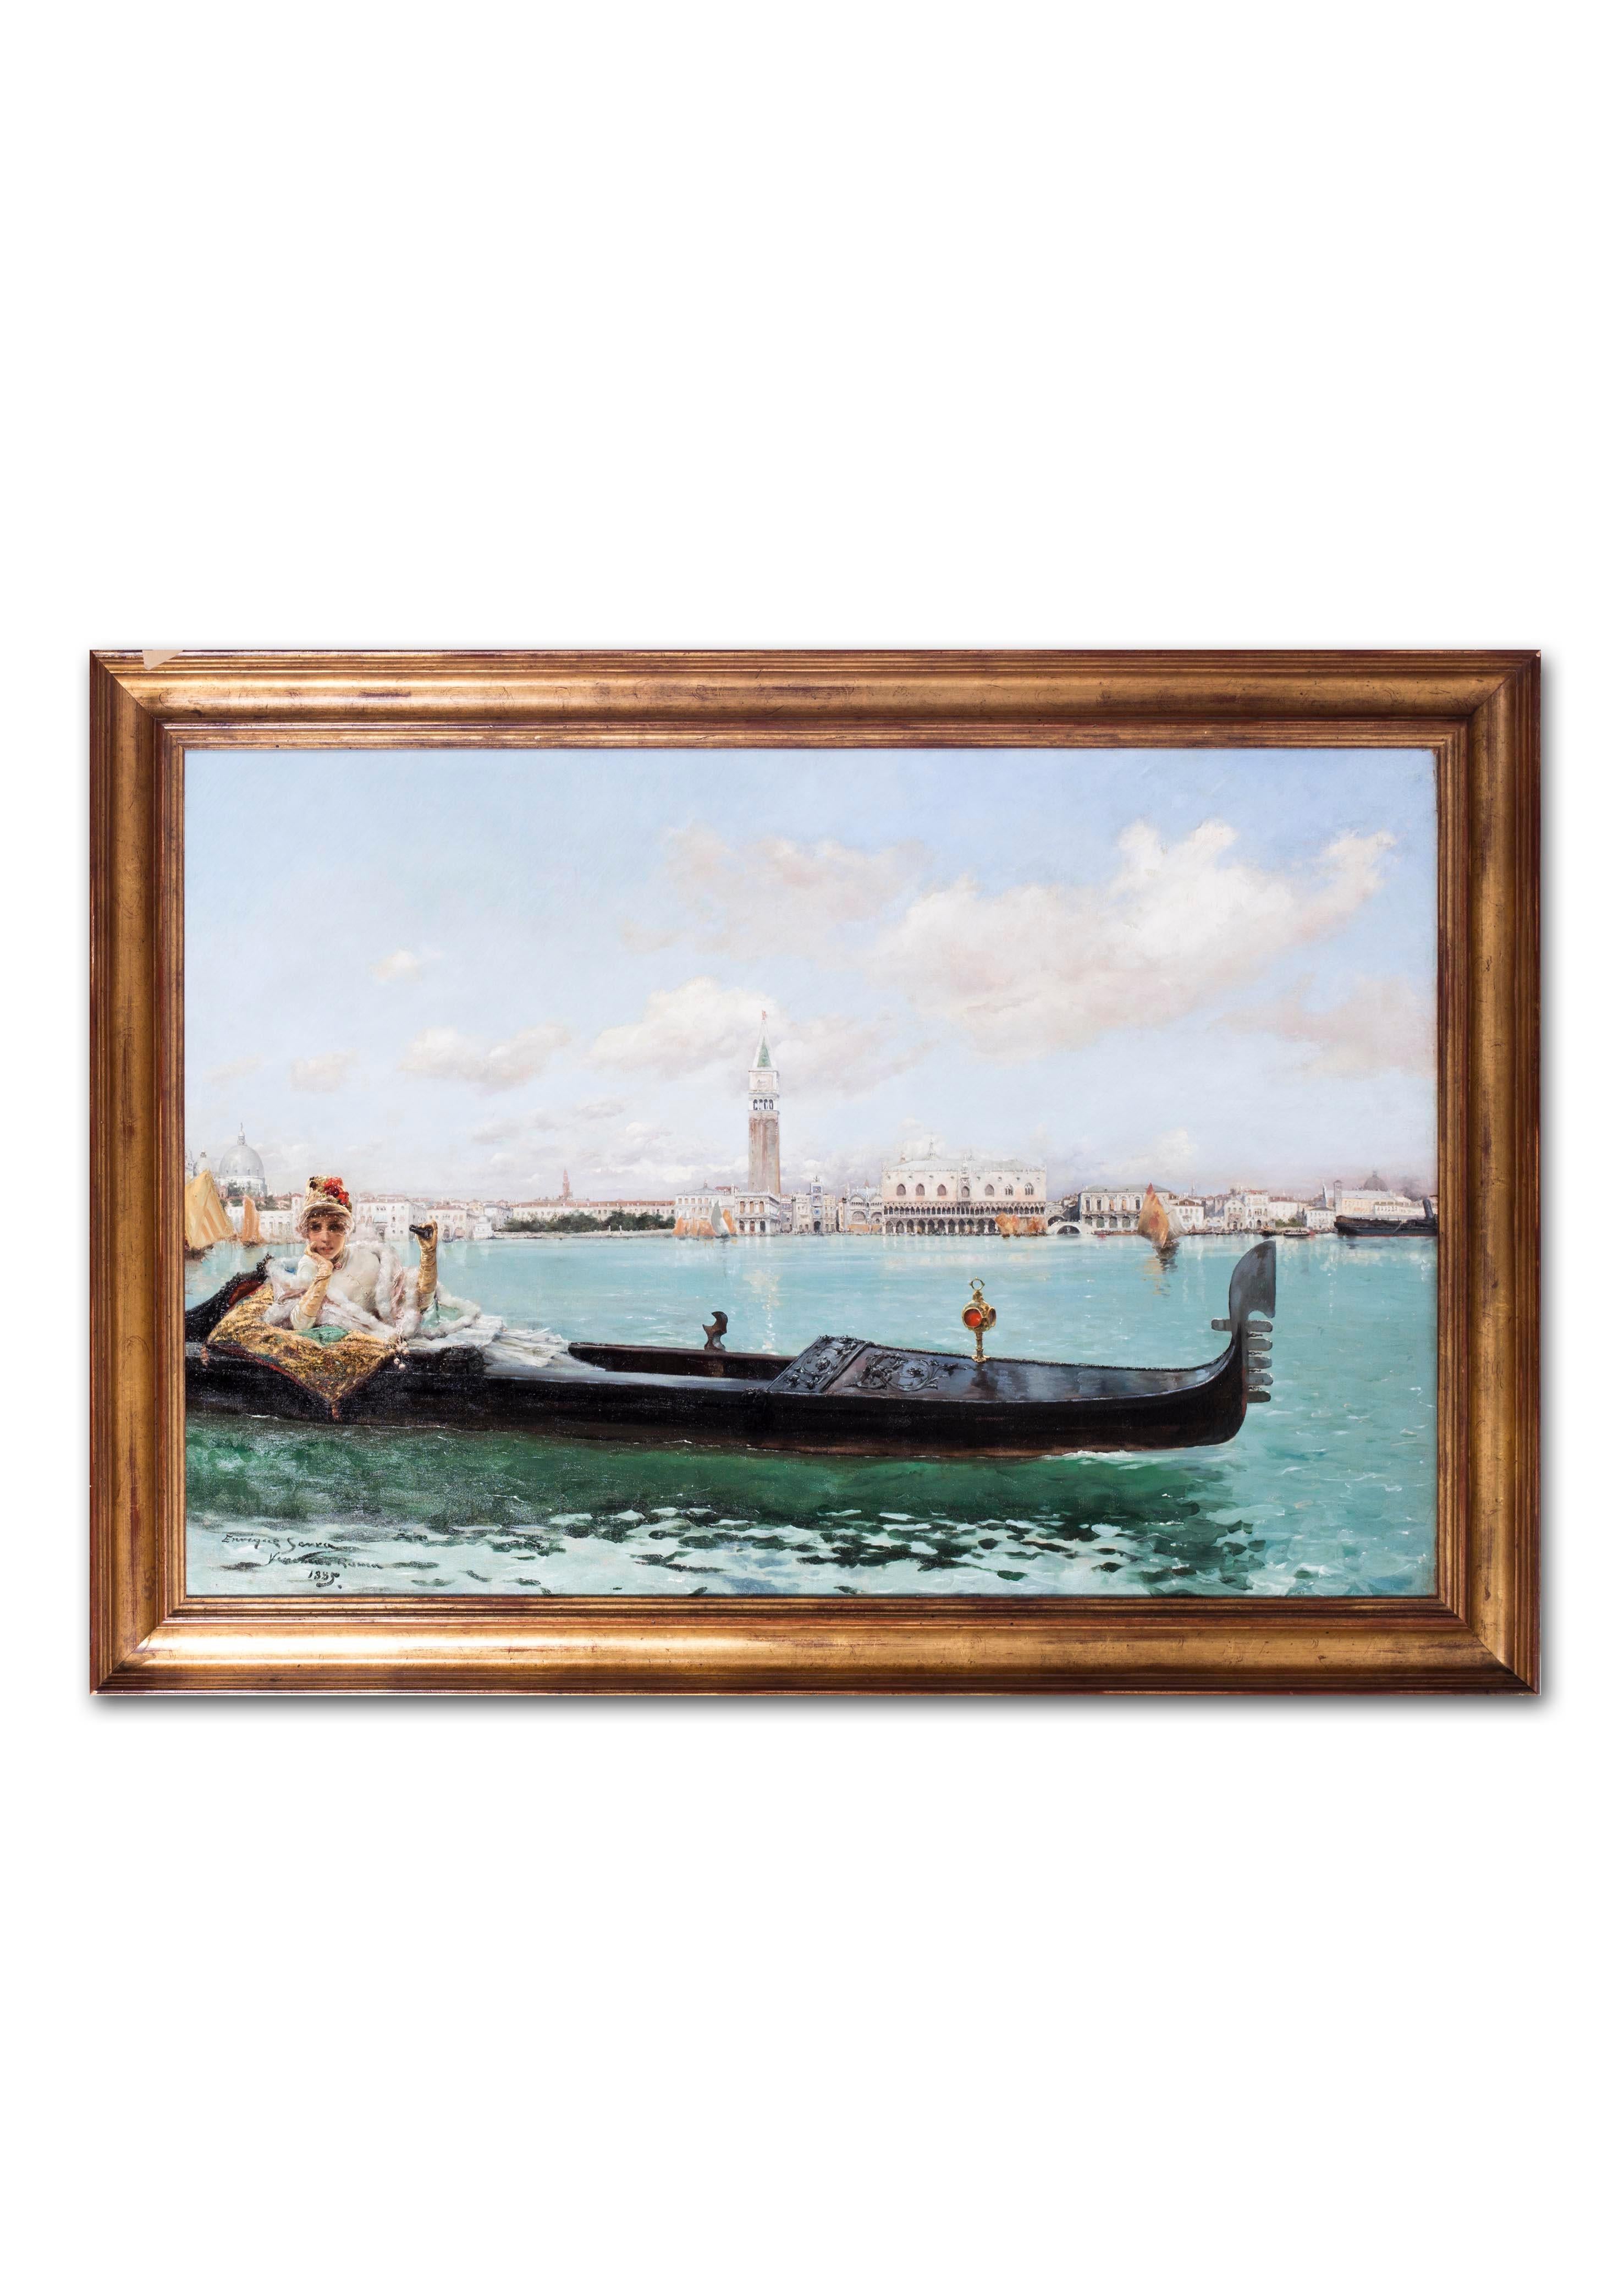 Enrique Serra (Spanish, 1859 – 1918)
An observer on the Venetian Lagoon
Oil on canvas
Signed, inscribe and dated ‘Enrique Serra / Venezia-Roma / 1885’ (lower left)
33 x 49 in. (83.8 x 124.5 cm.)

Enrique Serra y Auque was born in Barcelona in 1859